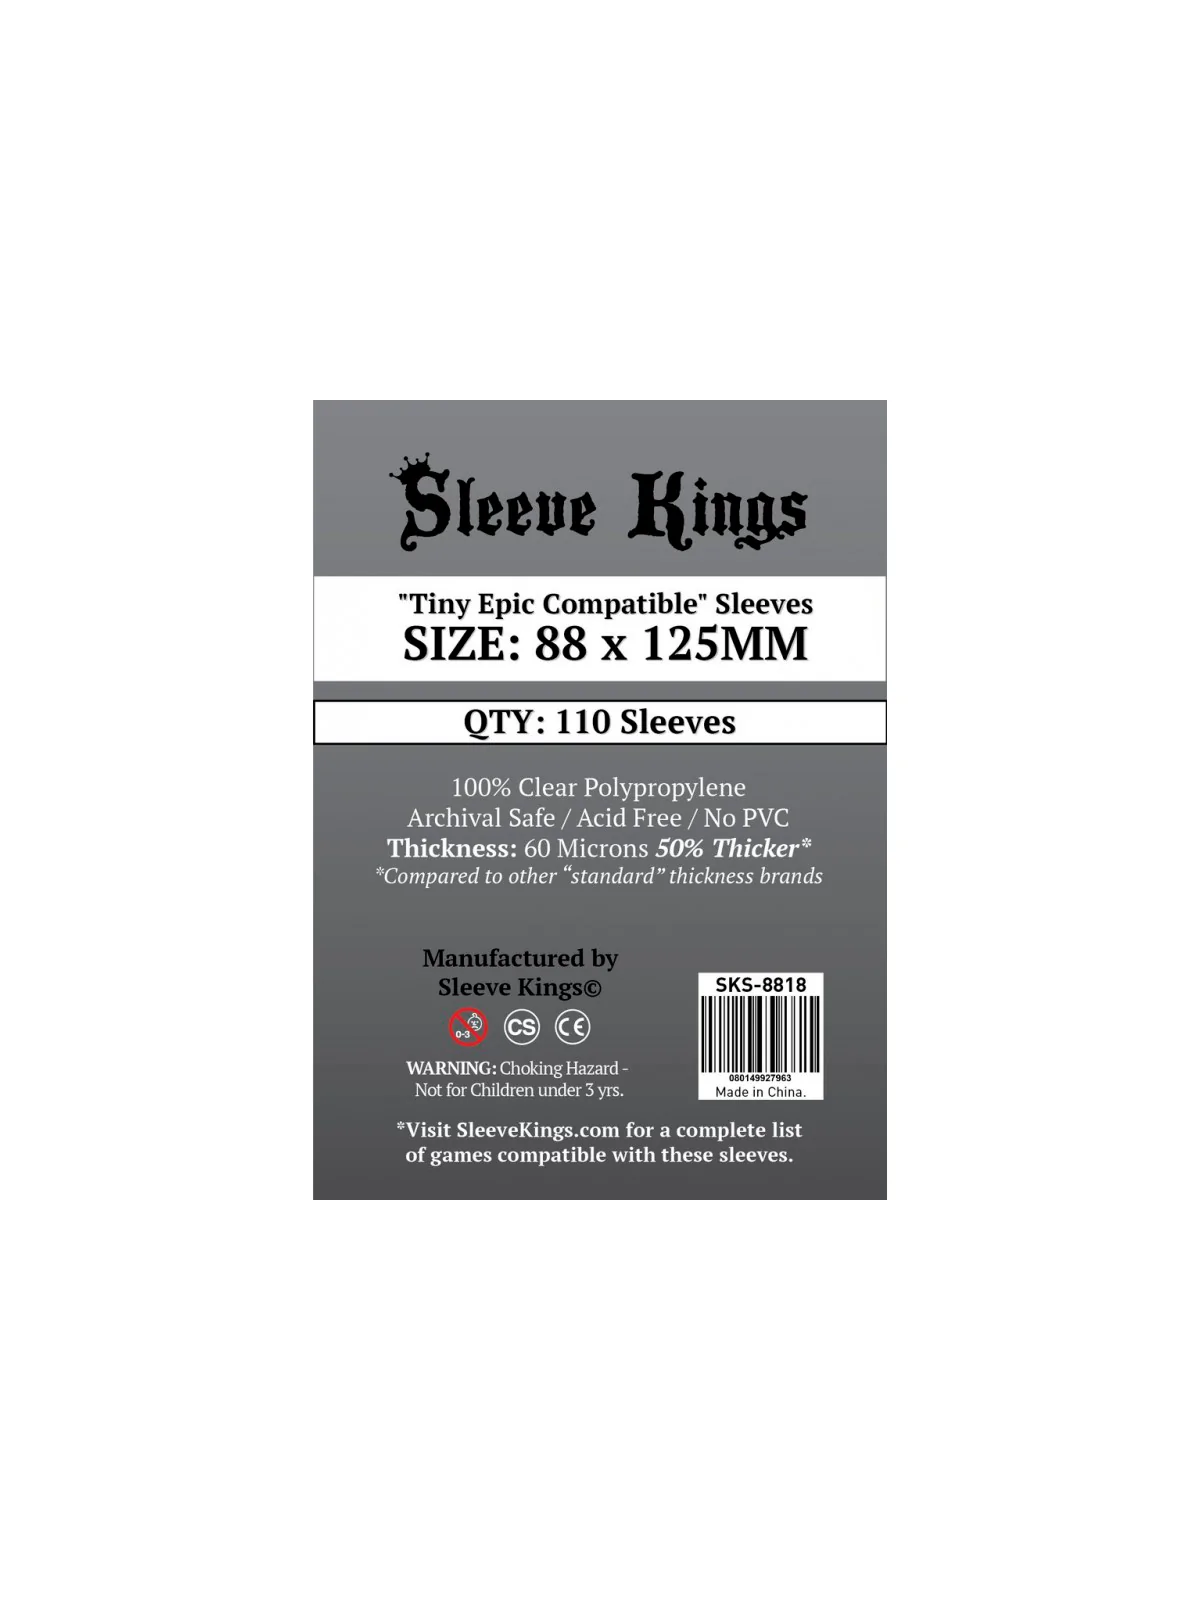 Comprar [8818] Sleeve Kings Tiny Epic Compatible Sleeves (88x125mm) ba